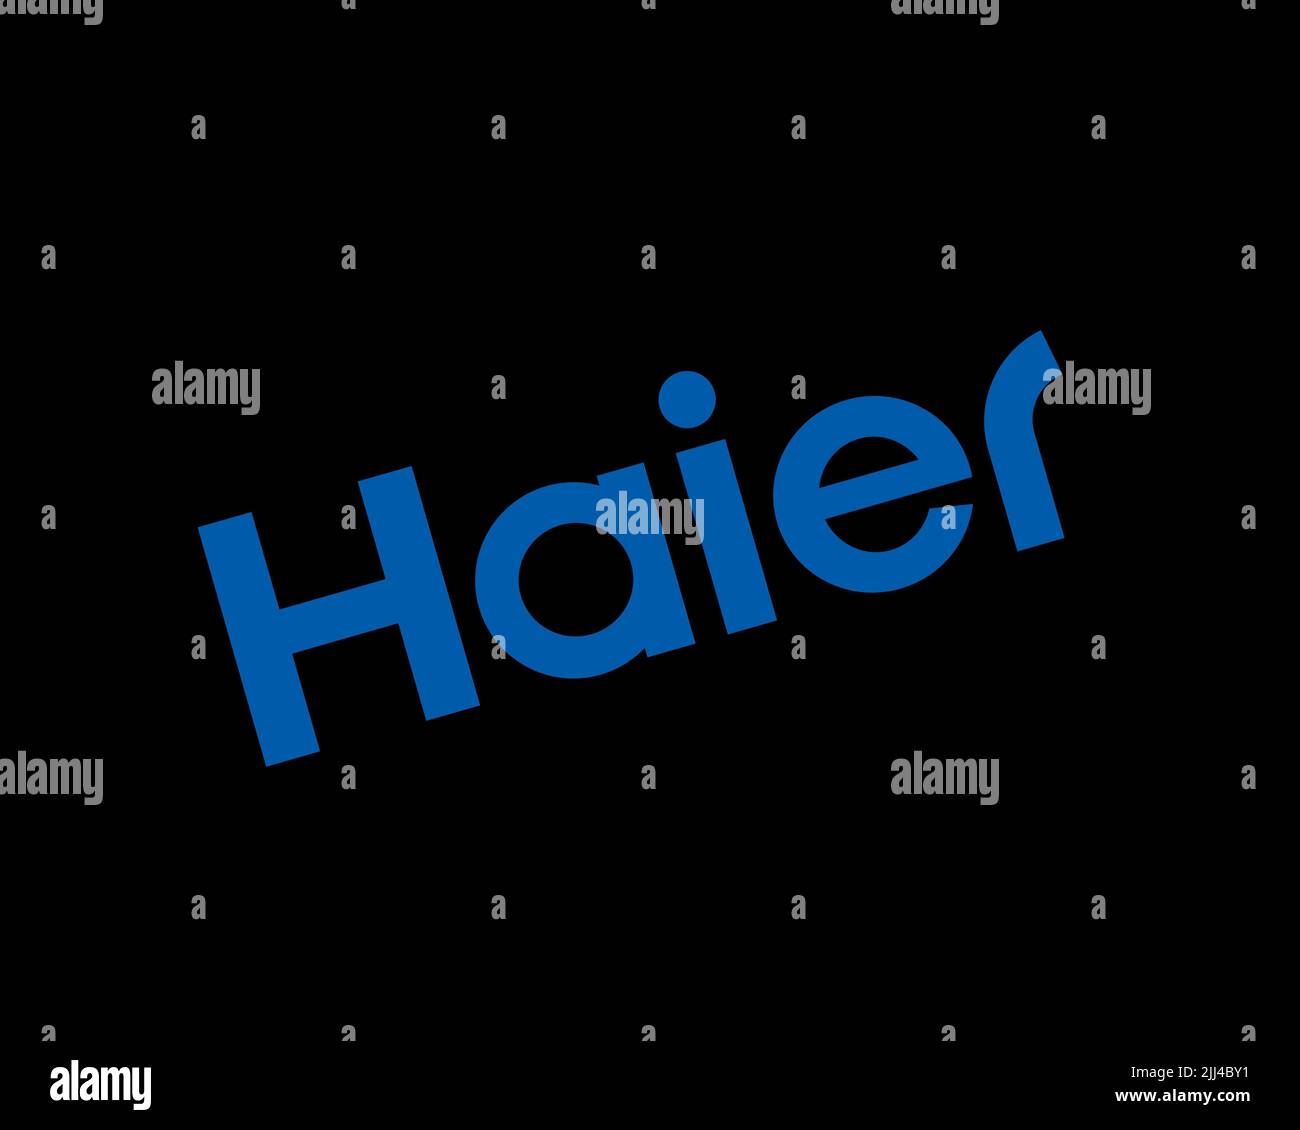 Haier, rotated logo, black background Stock Photo - Alamy